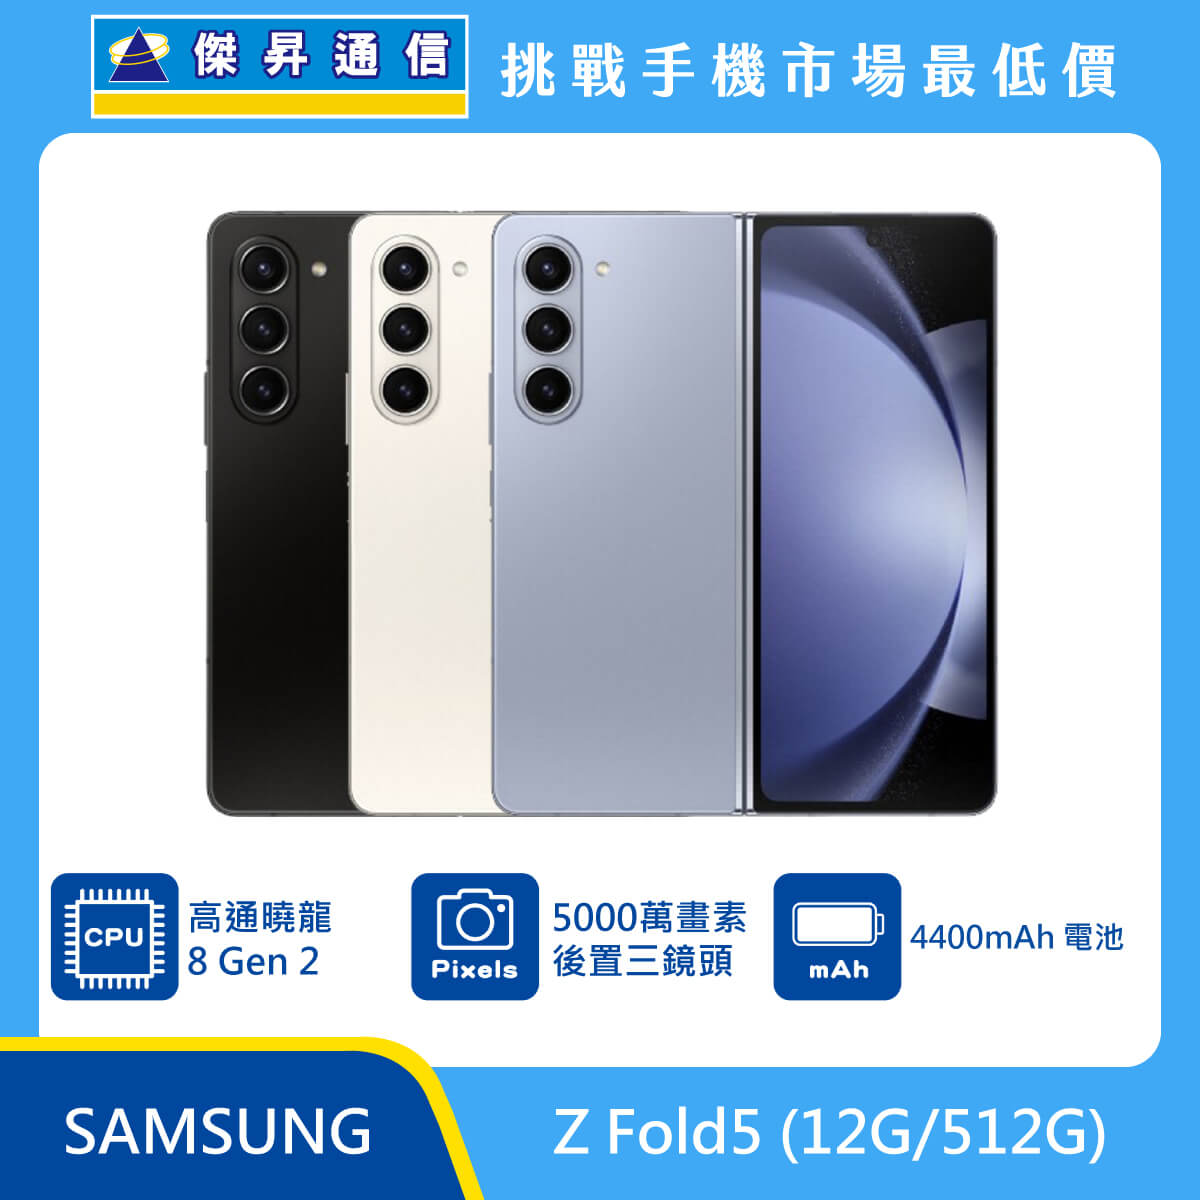 SAMSUNG Z Fold5 (12G/512G)